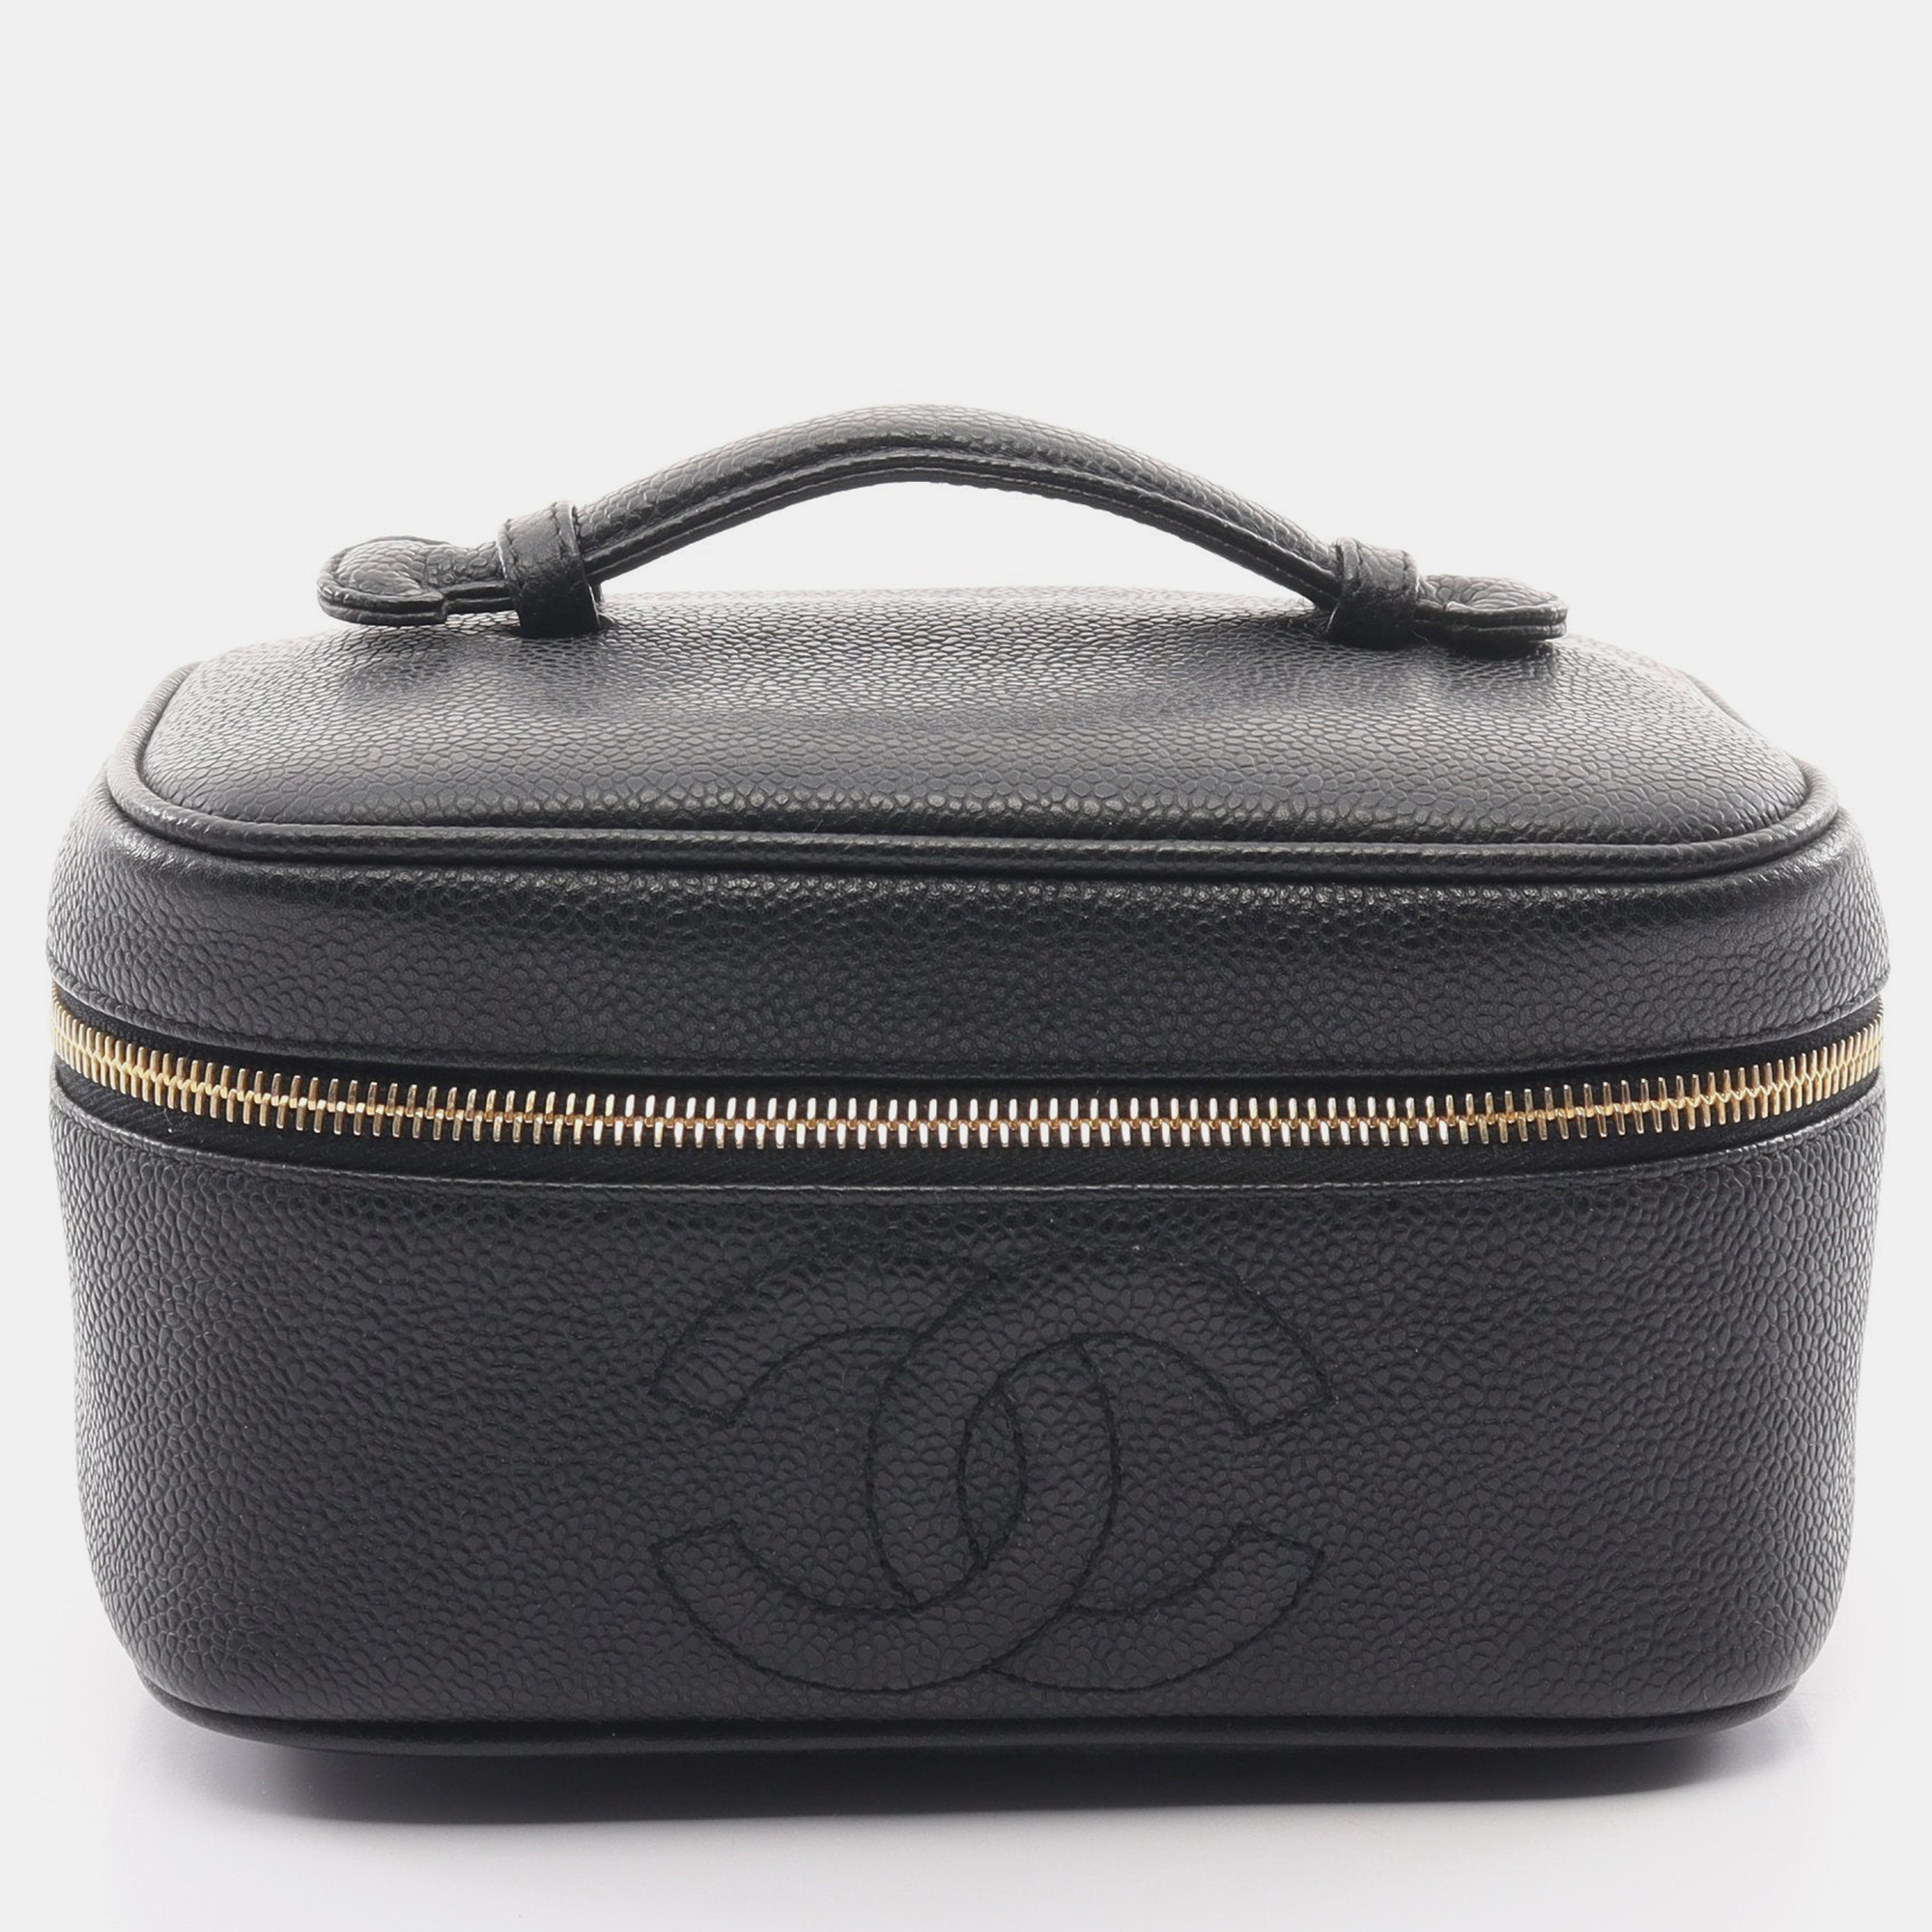 Chanel coco mark handbag vanity bag caviar skin black gold hardware